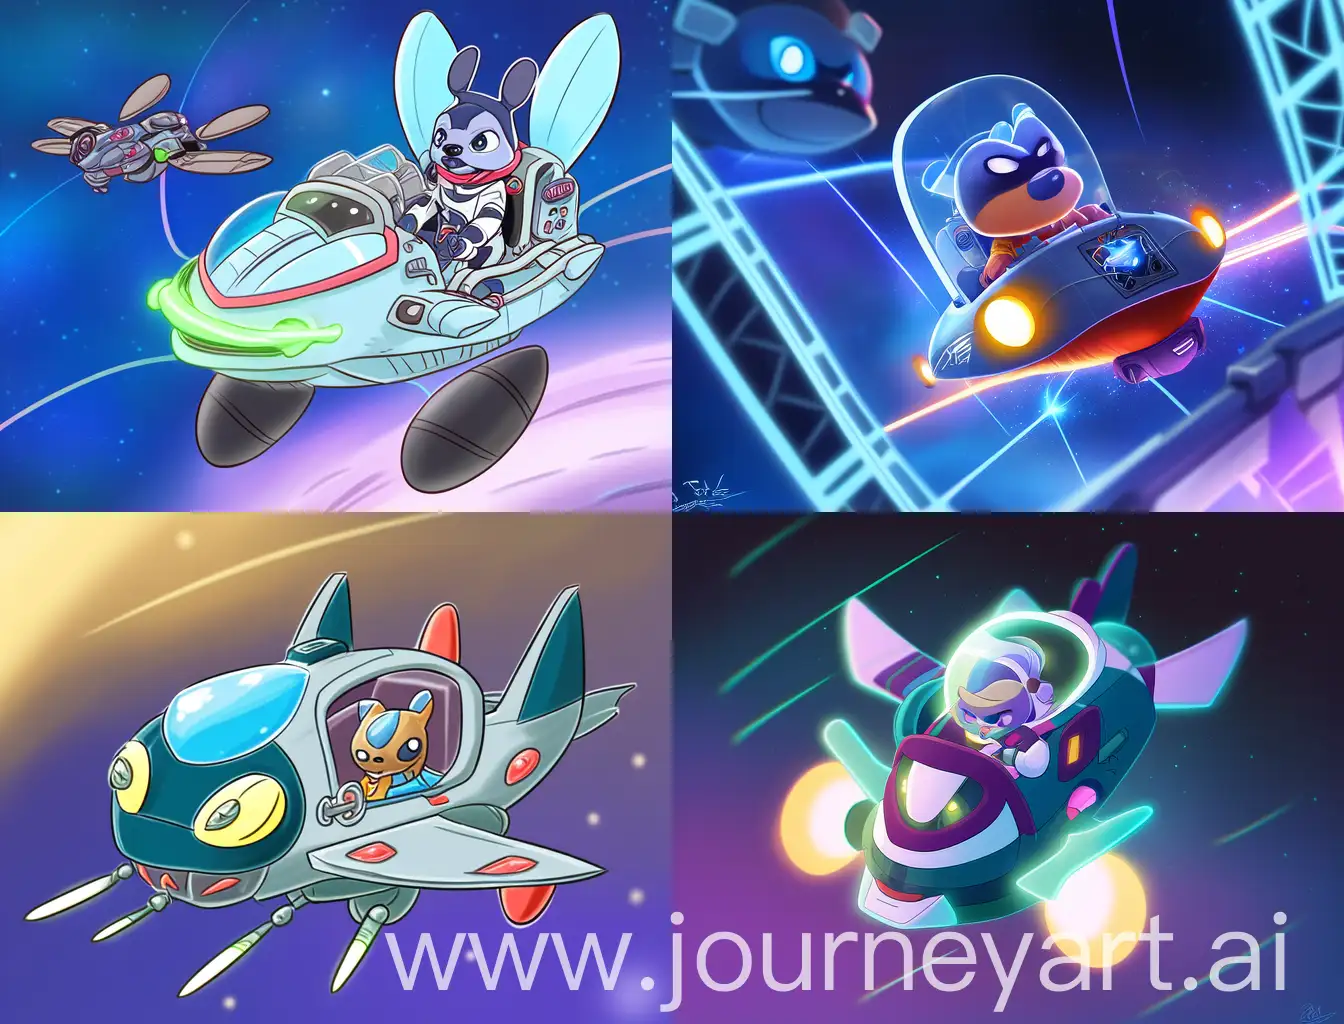 Stitch-Piloting-a-Disney-Cartoon-Style-Spaceship